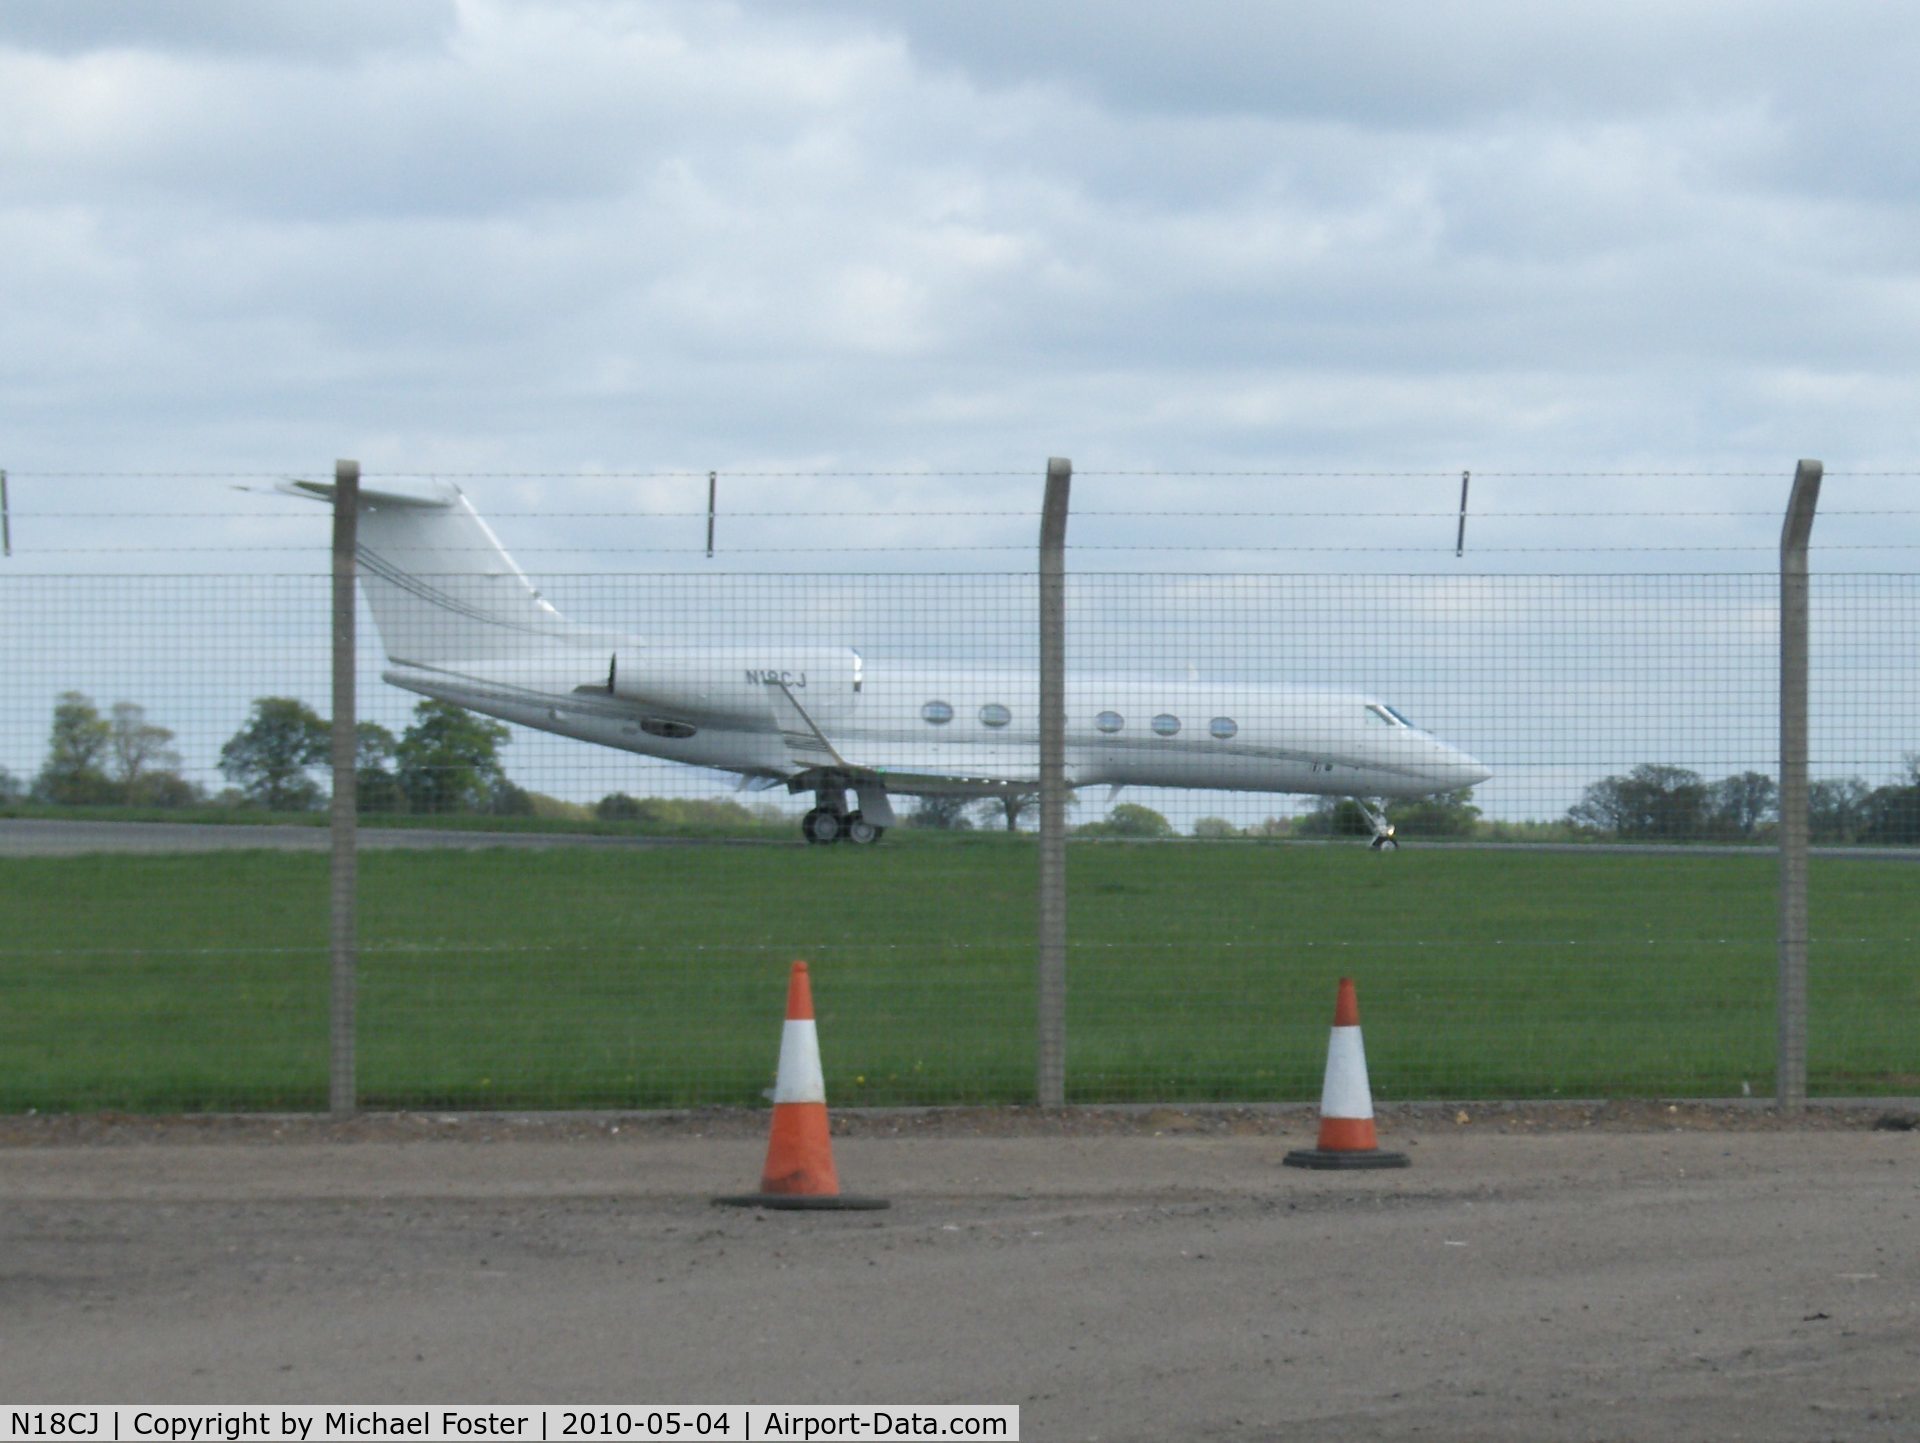 N18CJ, 2008 Gulfstream Aerospace GIV-X (G450) C/N 4141, At Luton Airport, waiting.